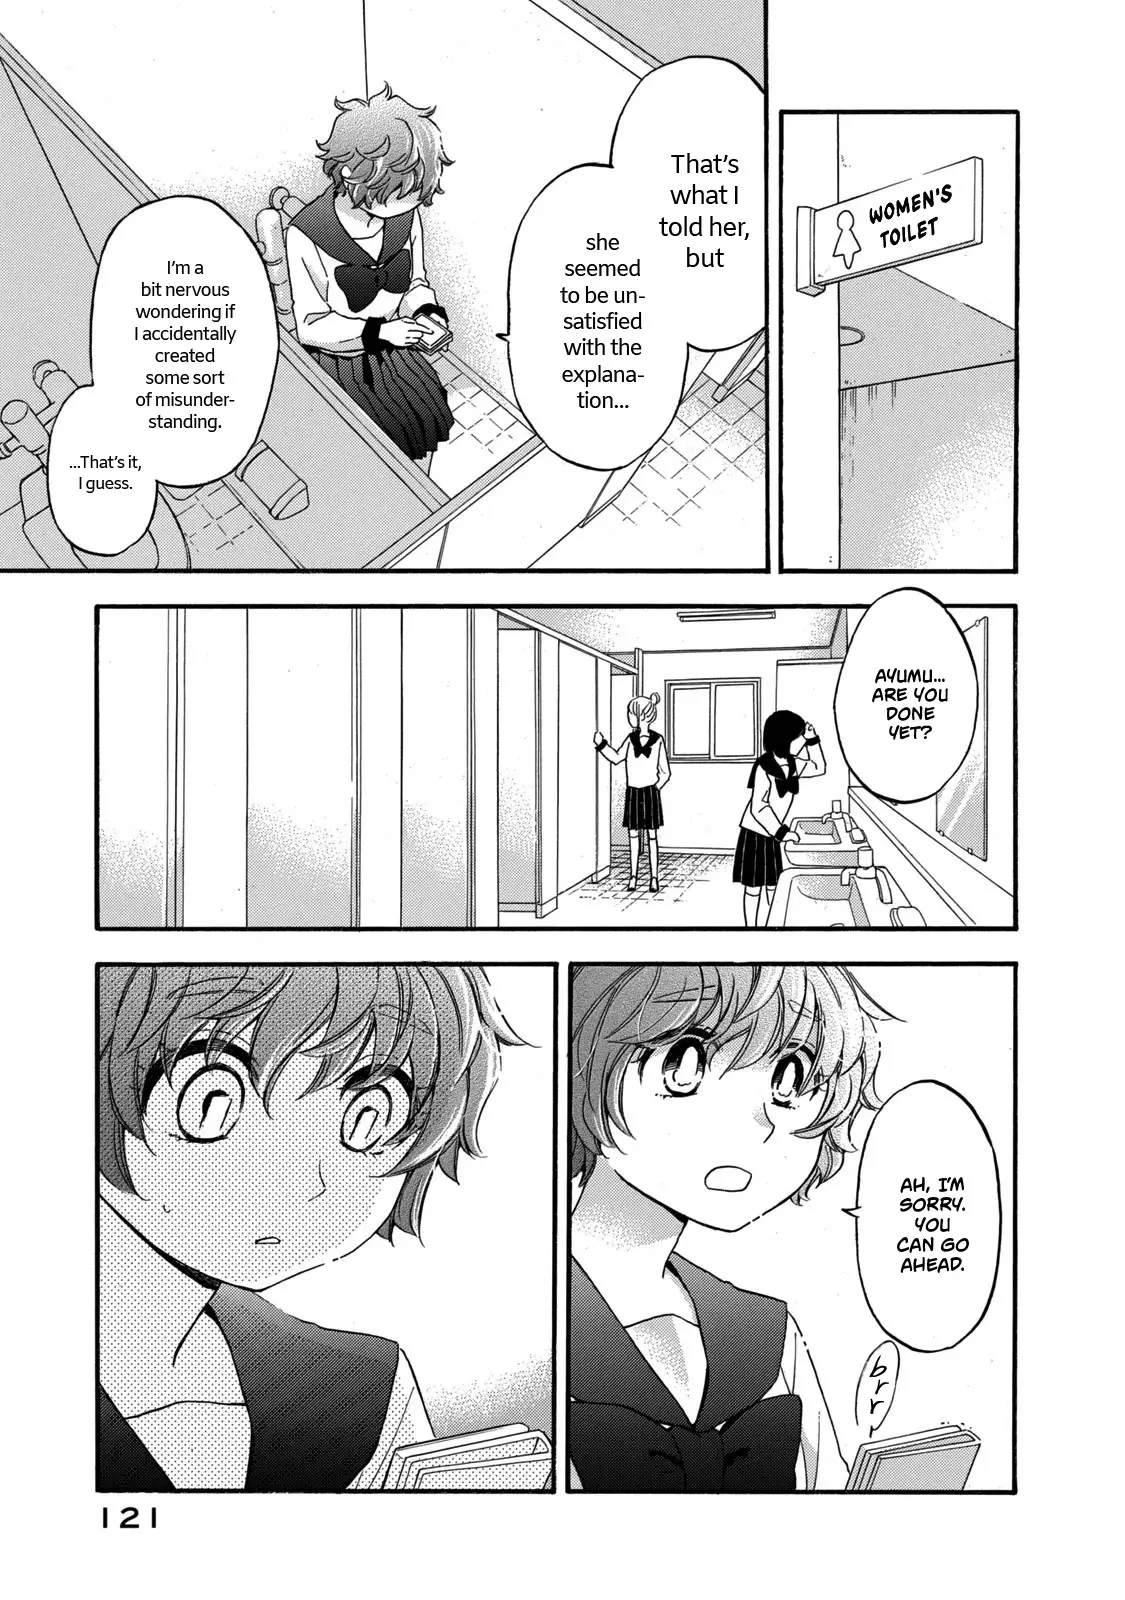 Hanazono And Kazoe's Bizzare After School Rendezvous - 25 page 9-4cca045a